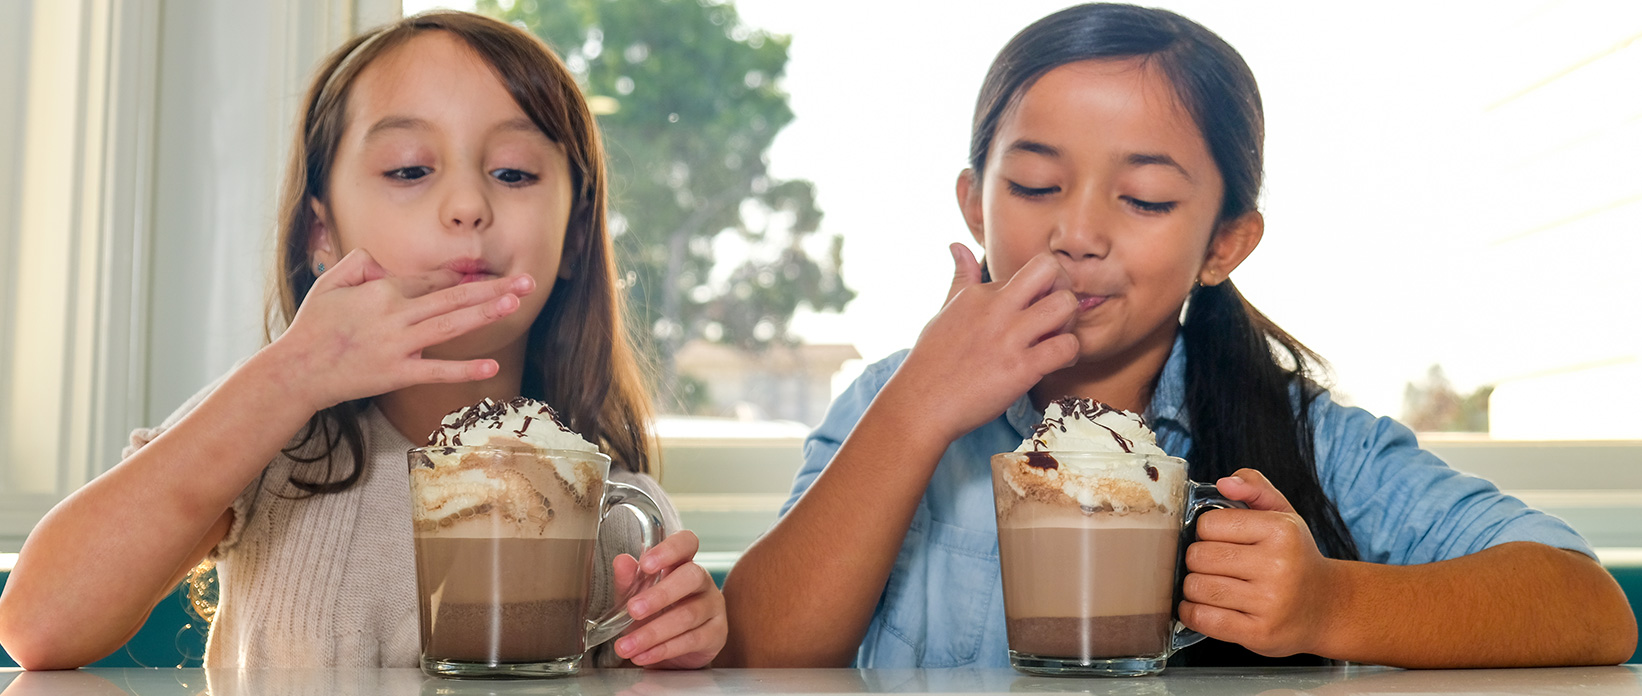 Two girls enjoying chocolate desserts